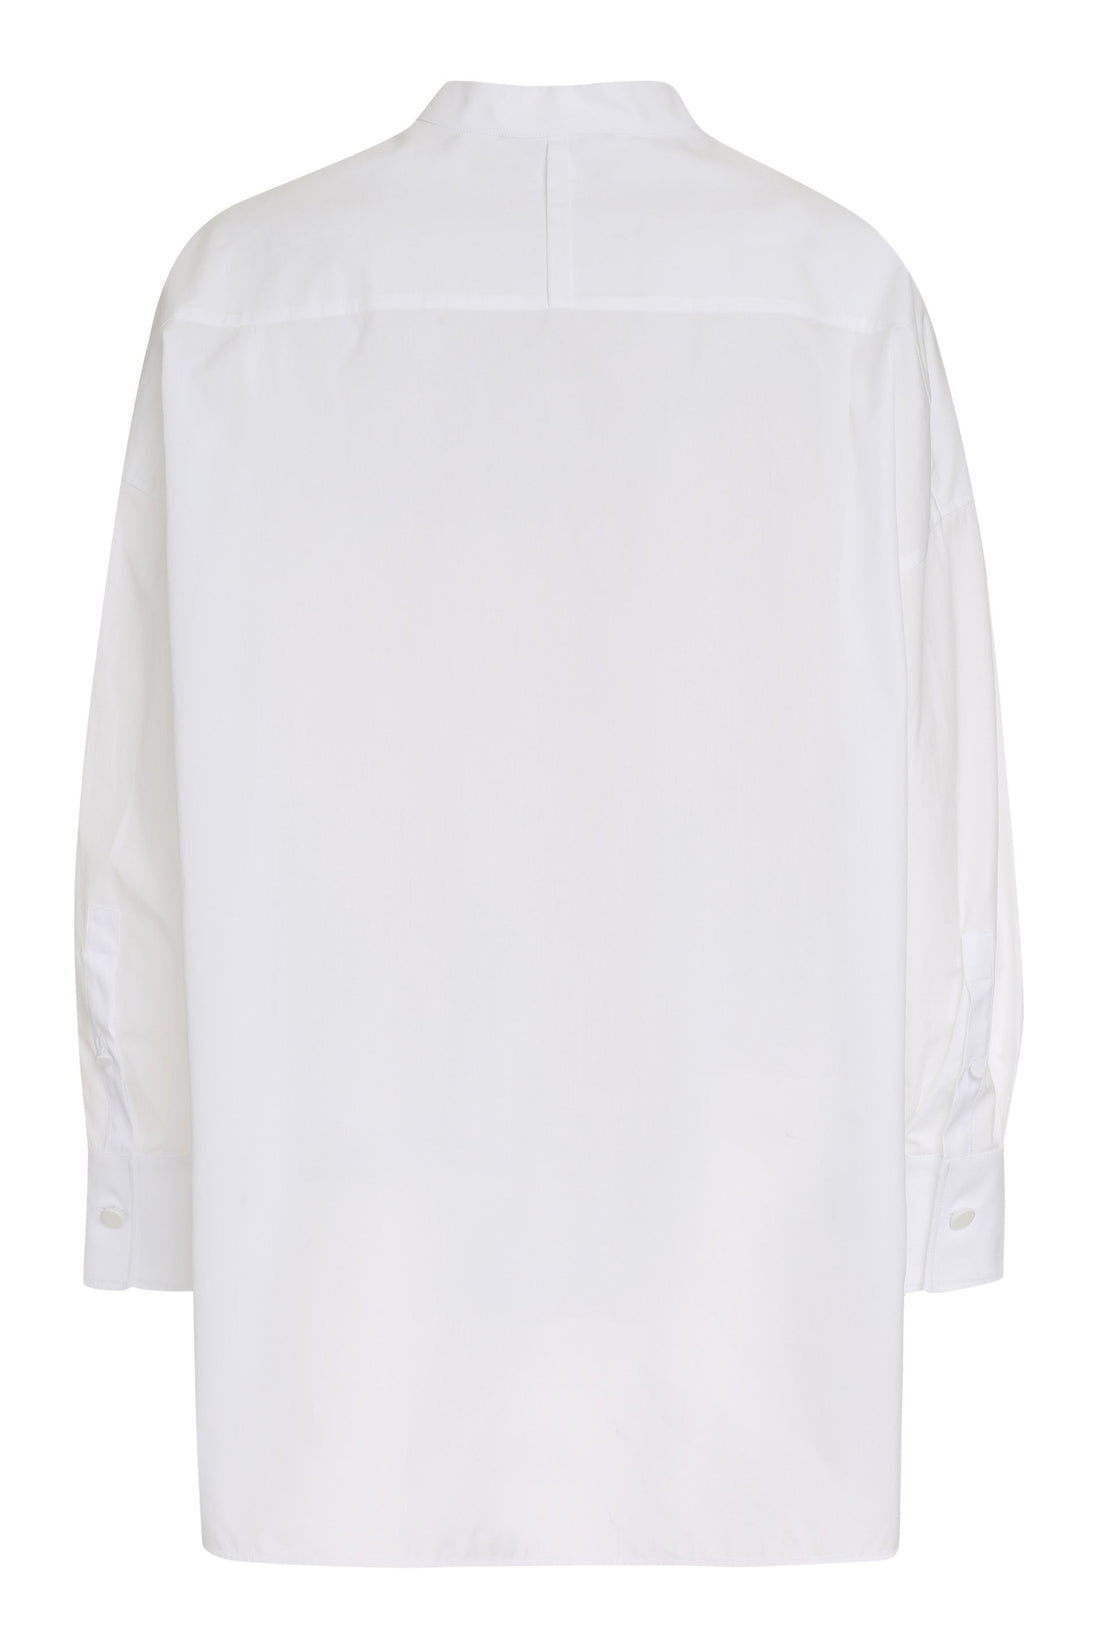 Max Mara-OUTLET-SALE-Fauna cotton shirt-ARCHIVIST